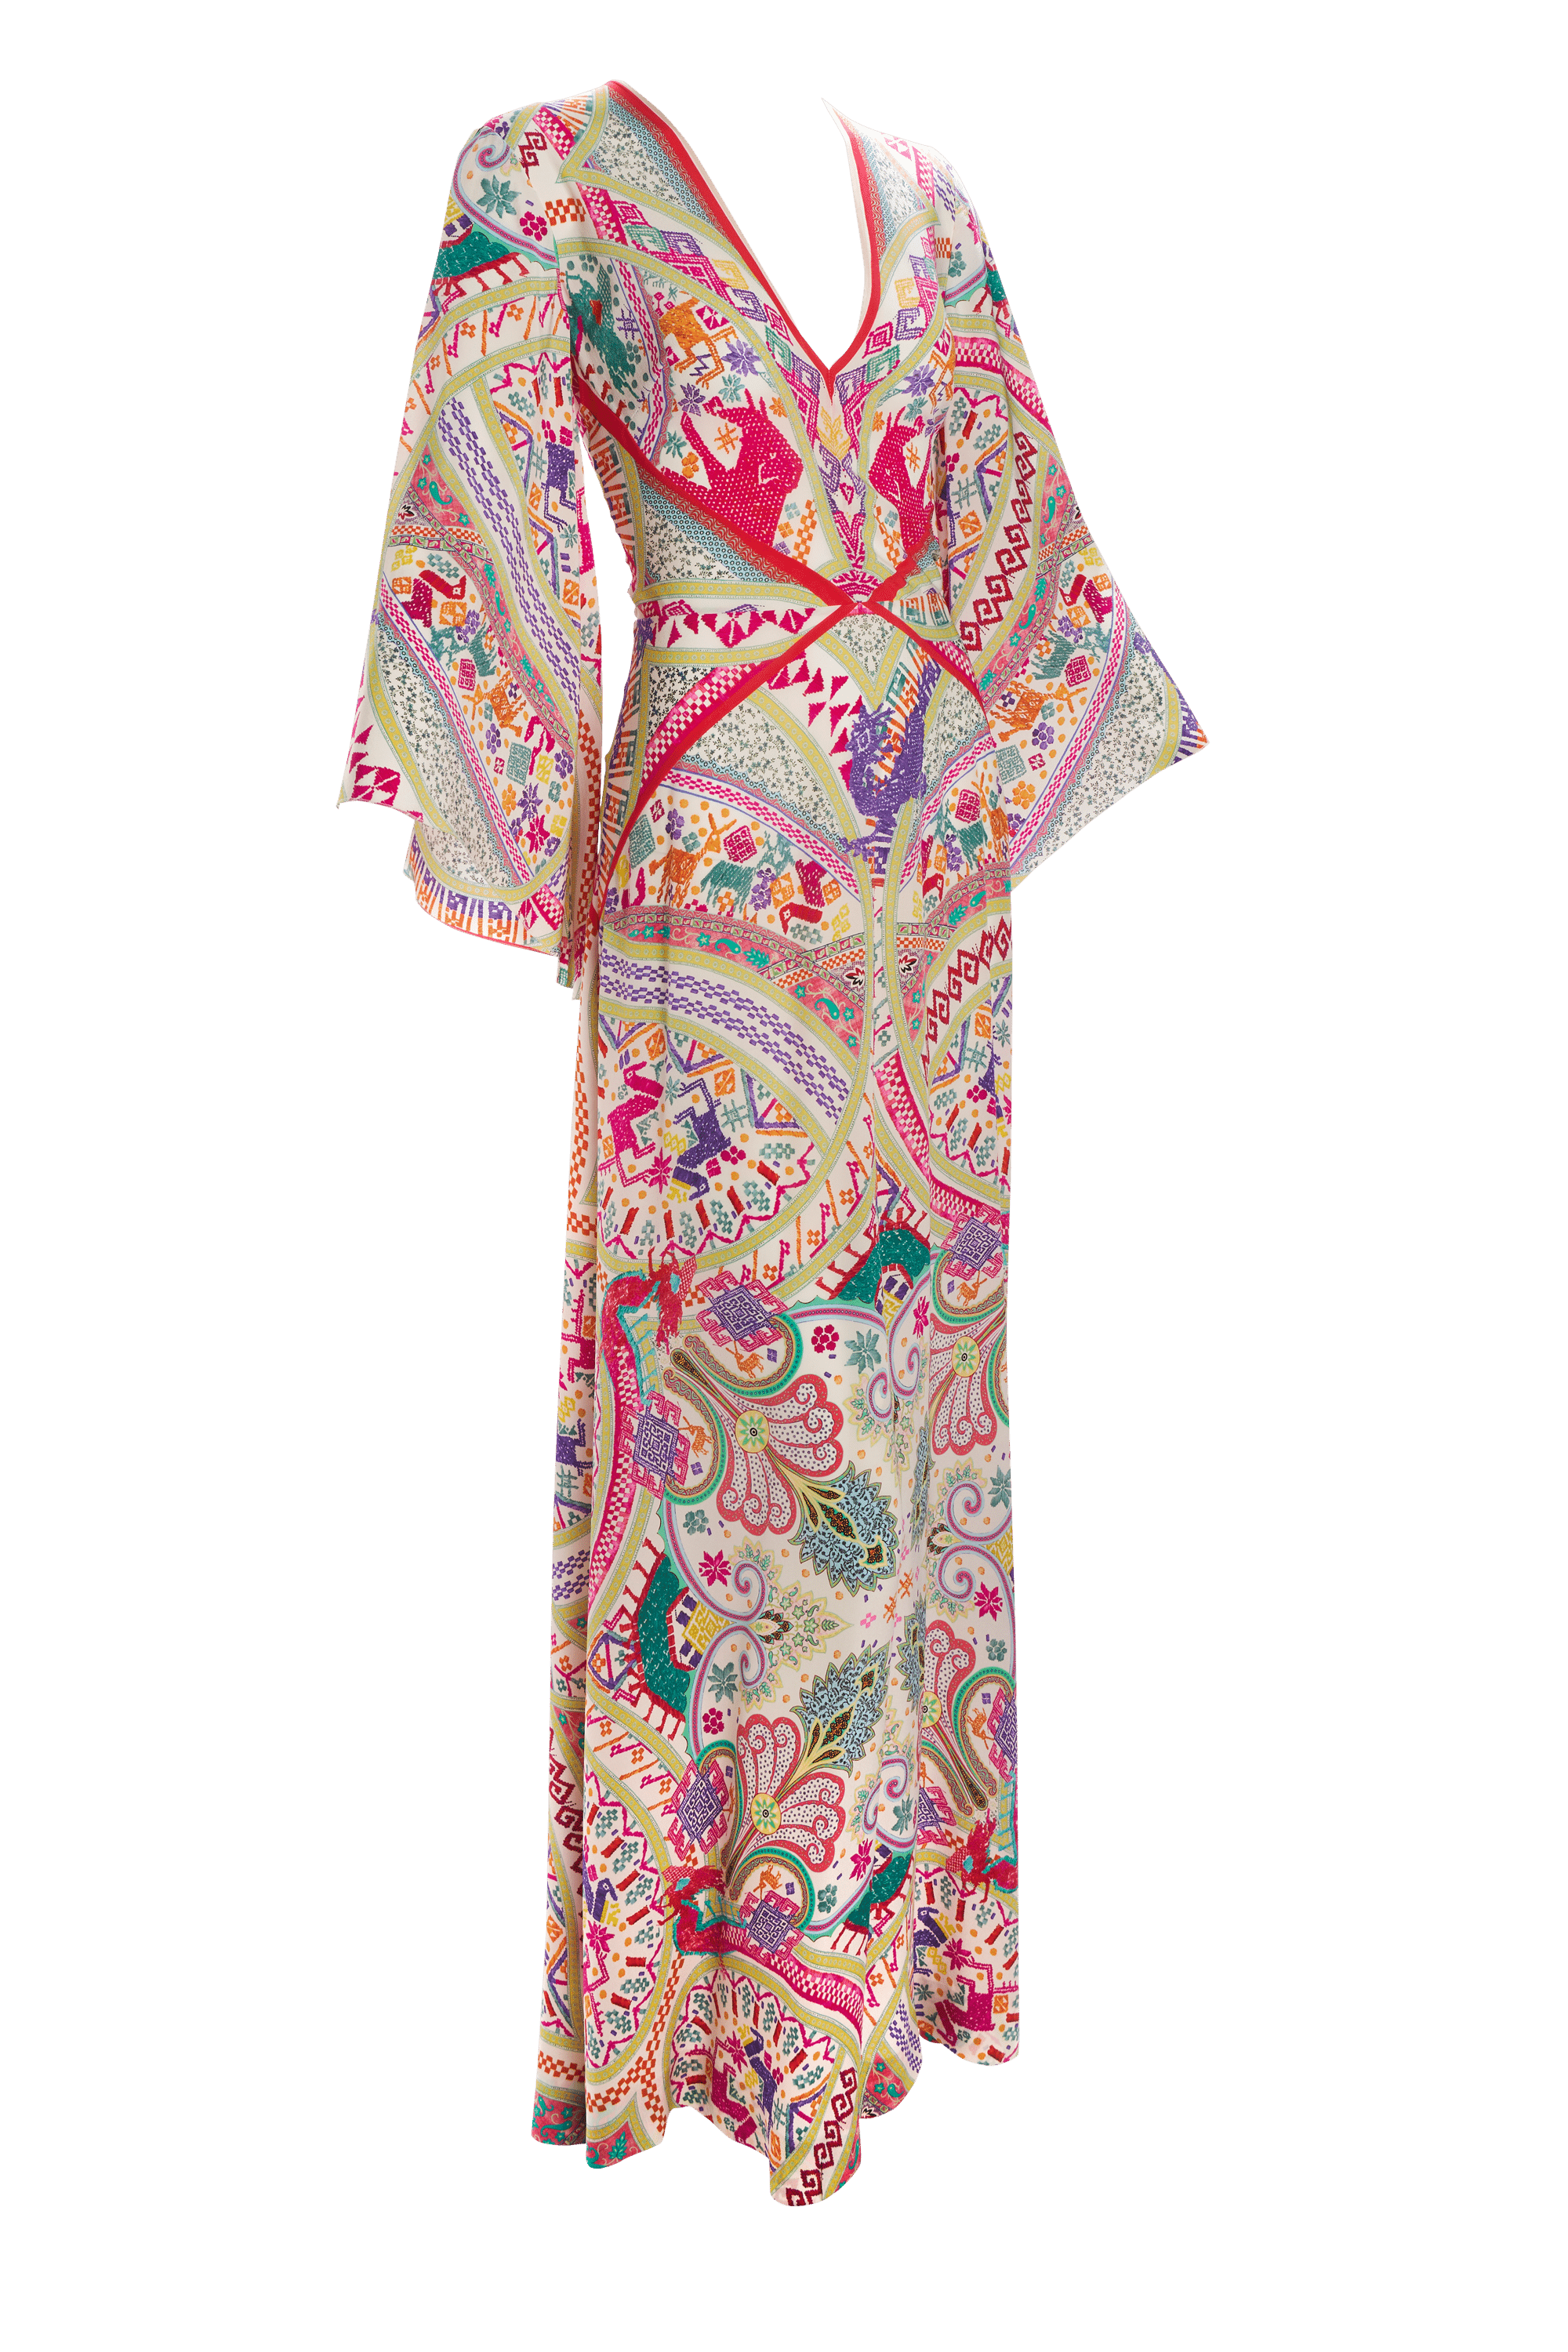 Etro World Travels Cross Hatched Print Maxi Dress